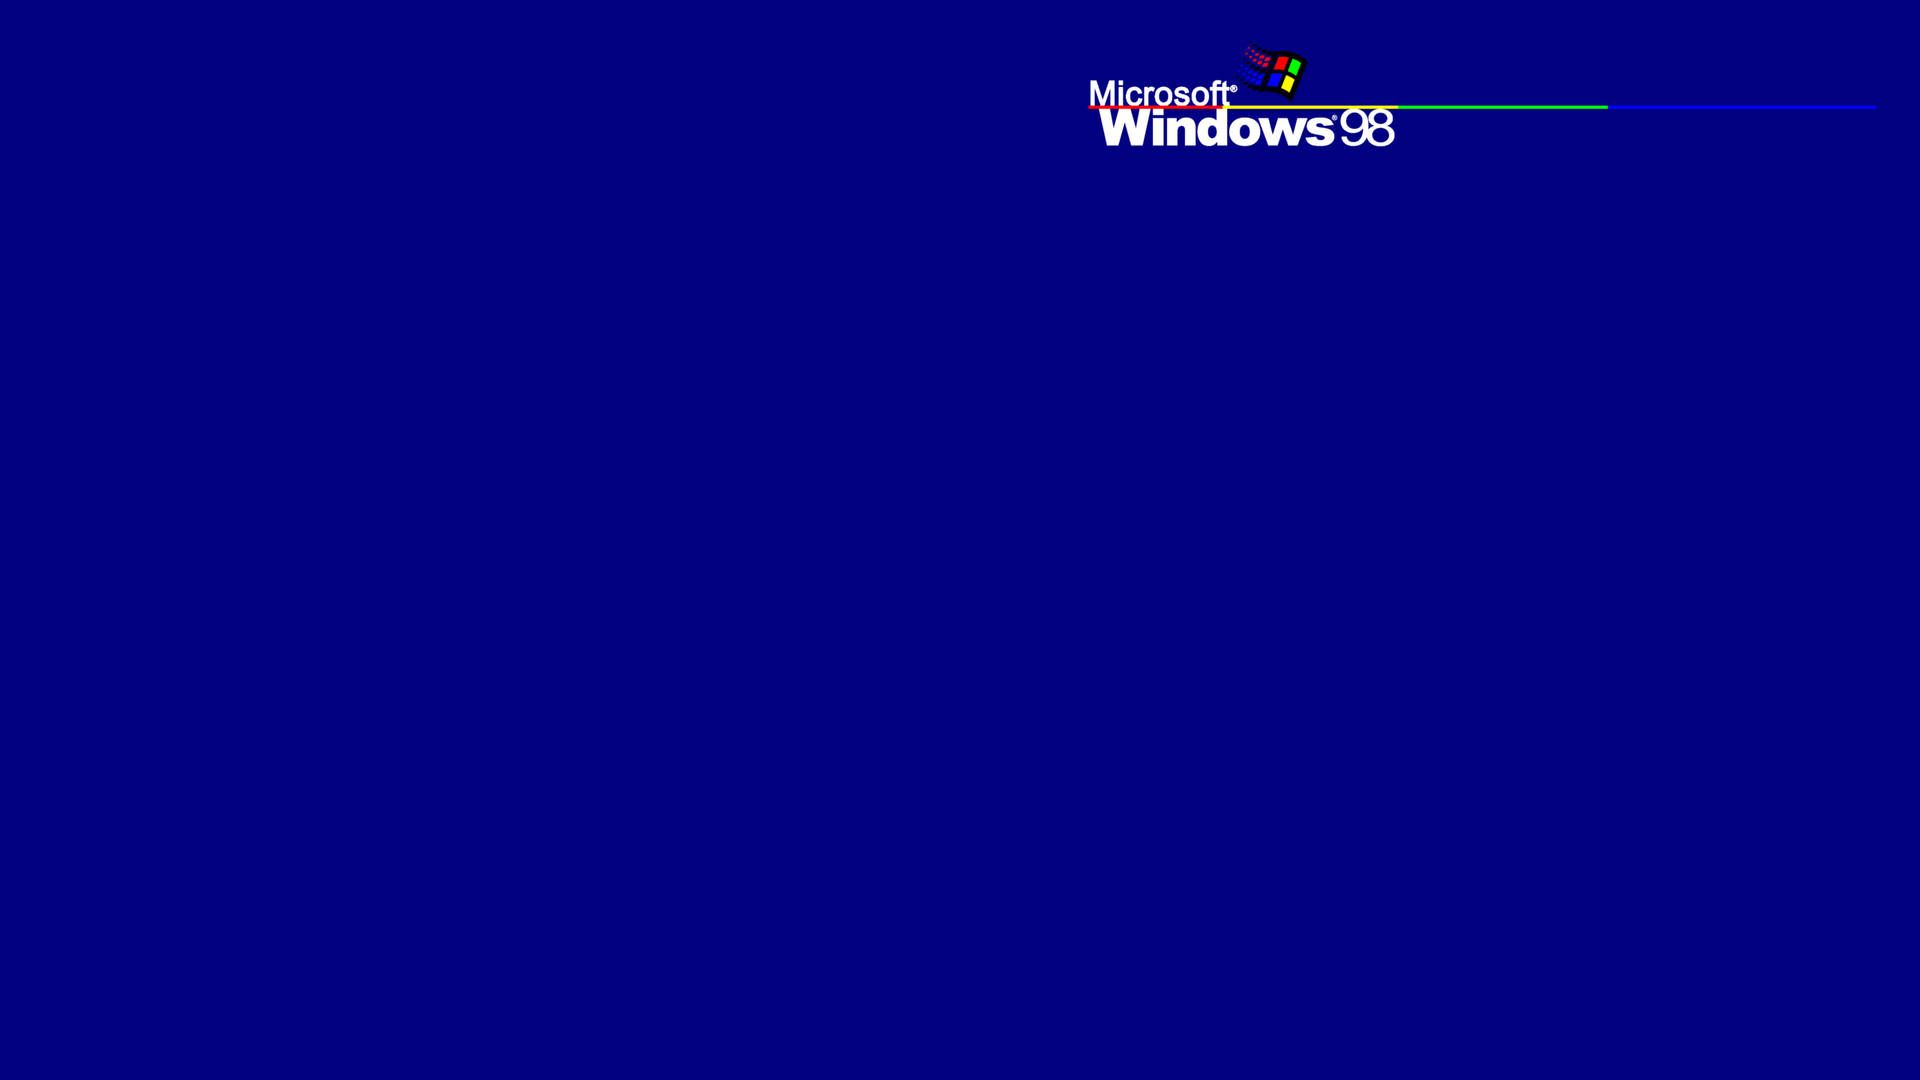 Free Windows 98 Wallpaper Downloads, Windows 98 Wallpaper for FREE